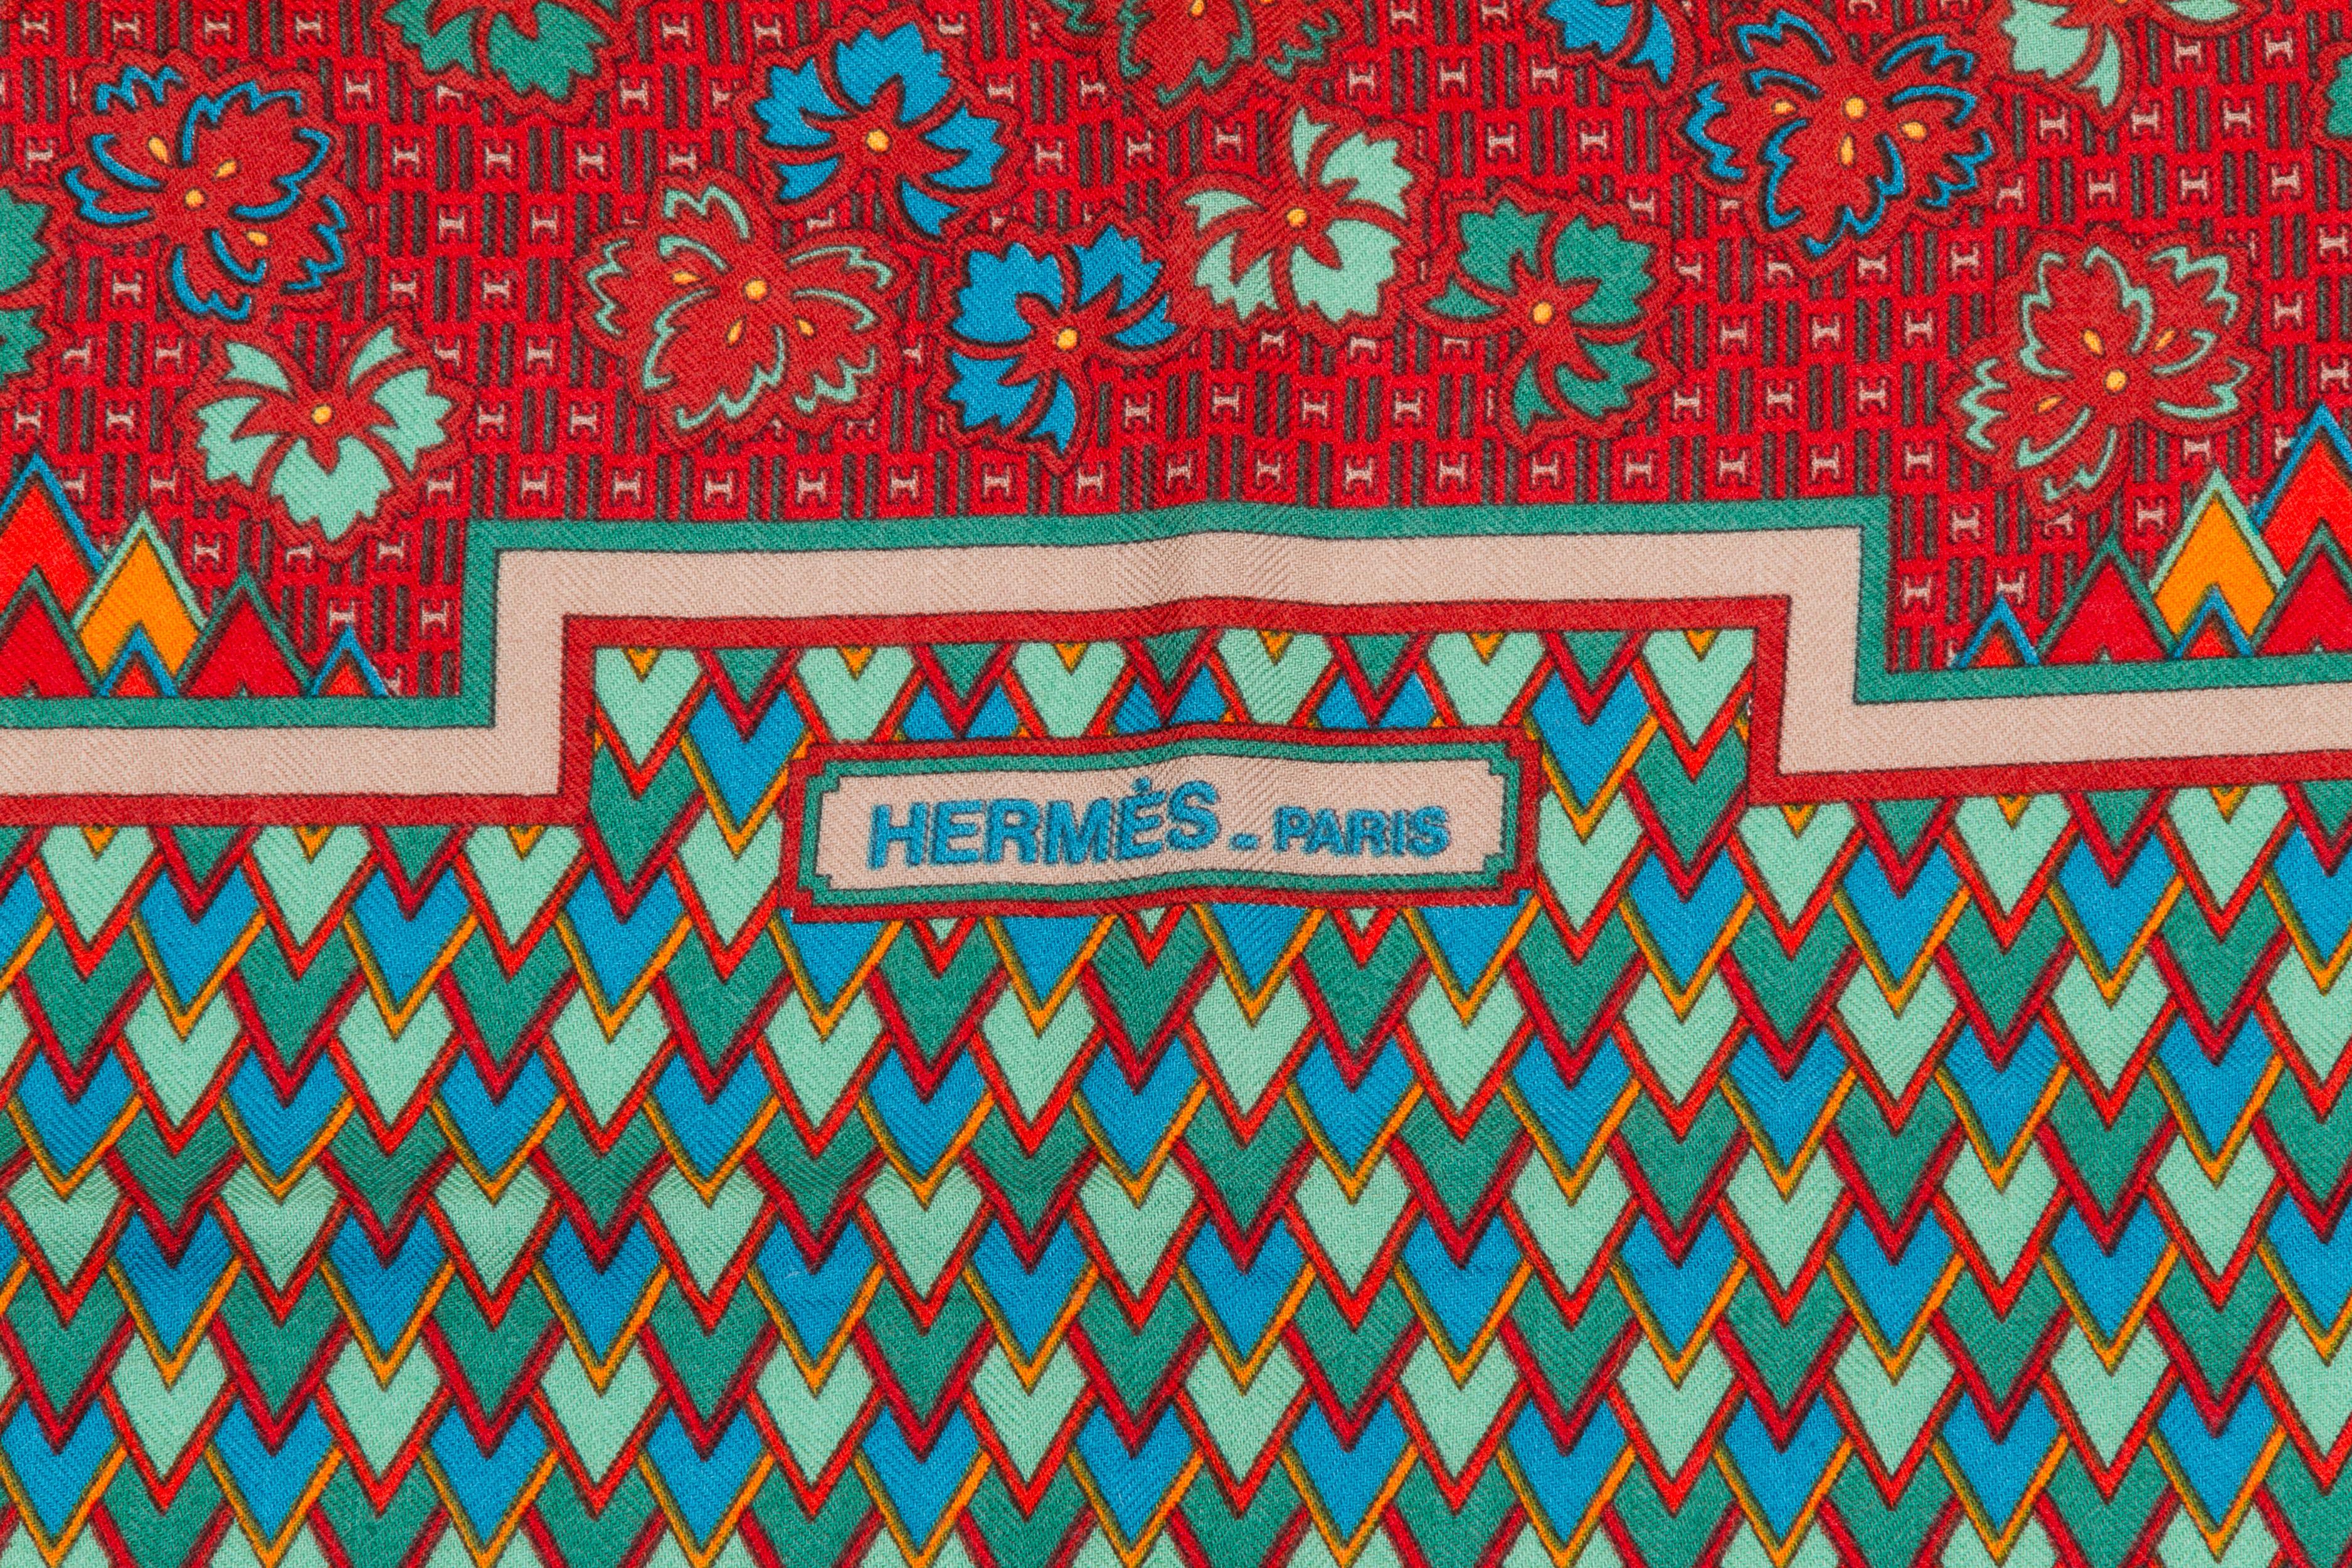 Hermès oversize cashmere and silk blend 55